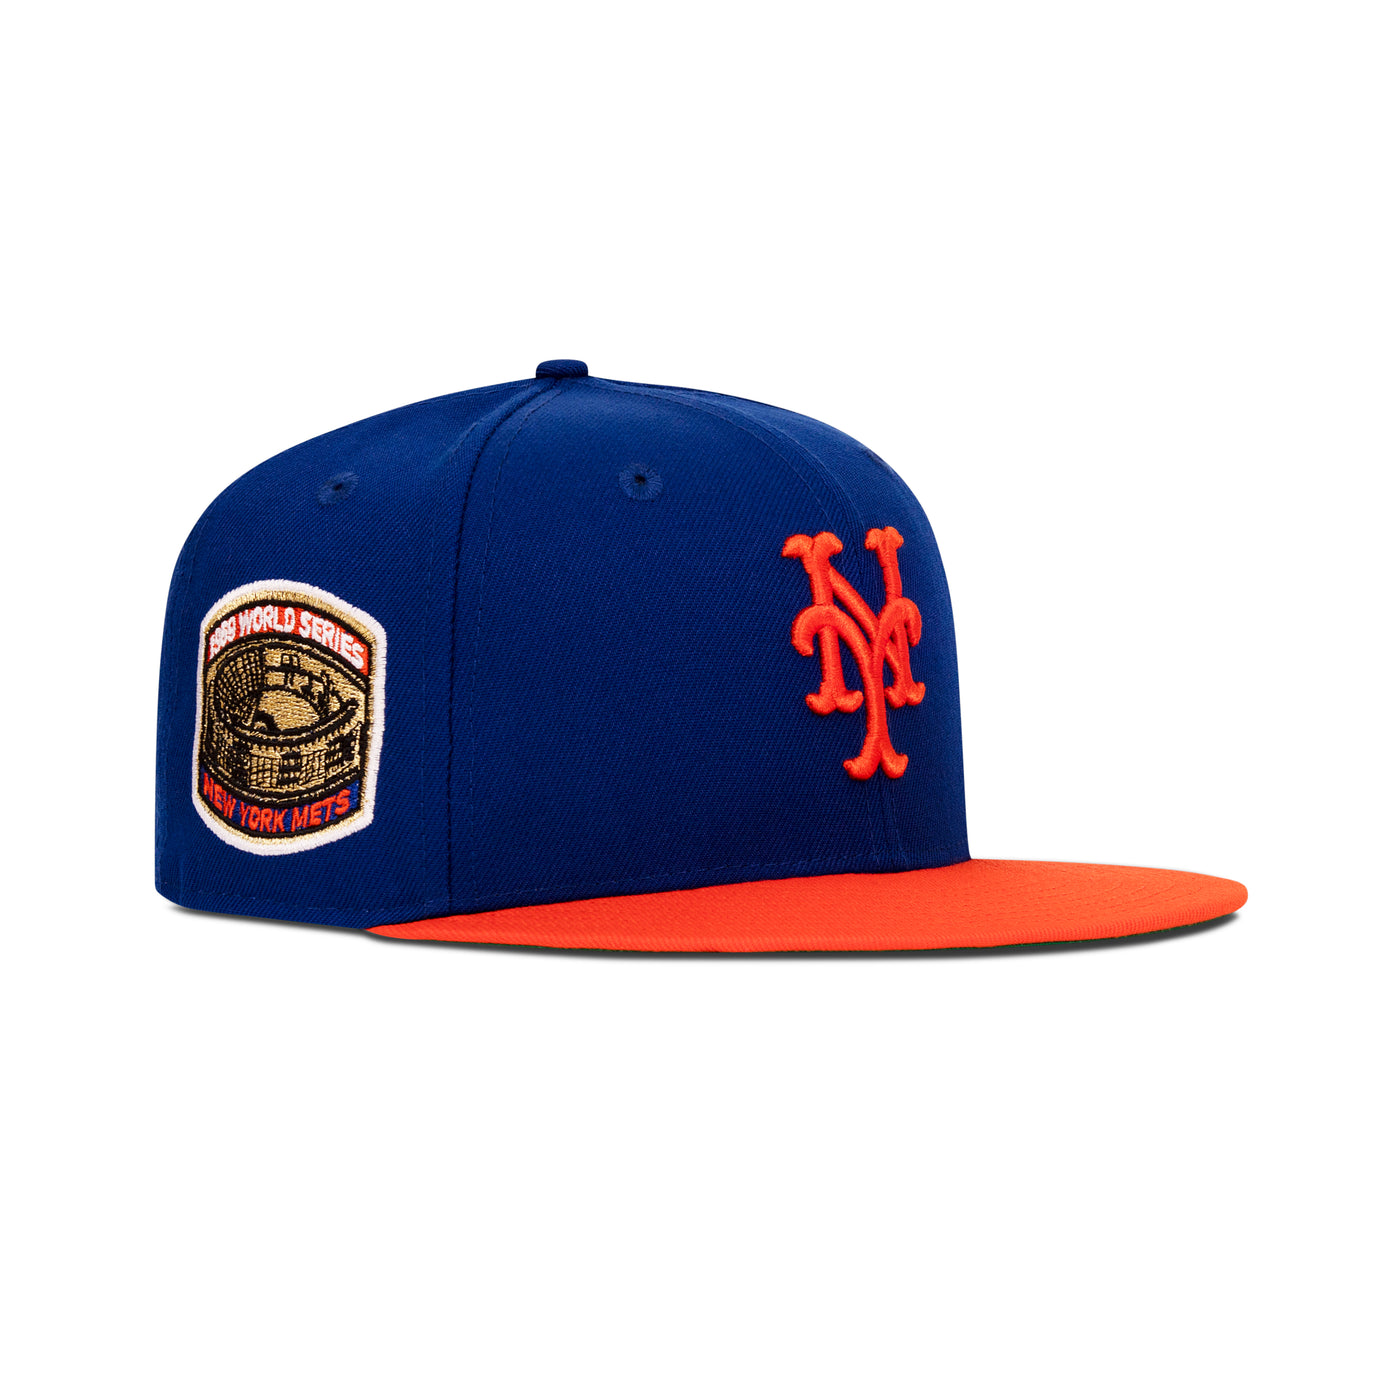 New Era New York Mets Fitted Green Bottom Royal Blue Orange